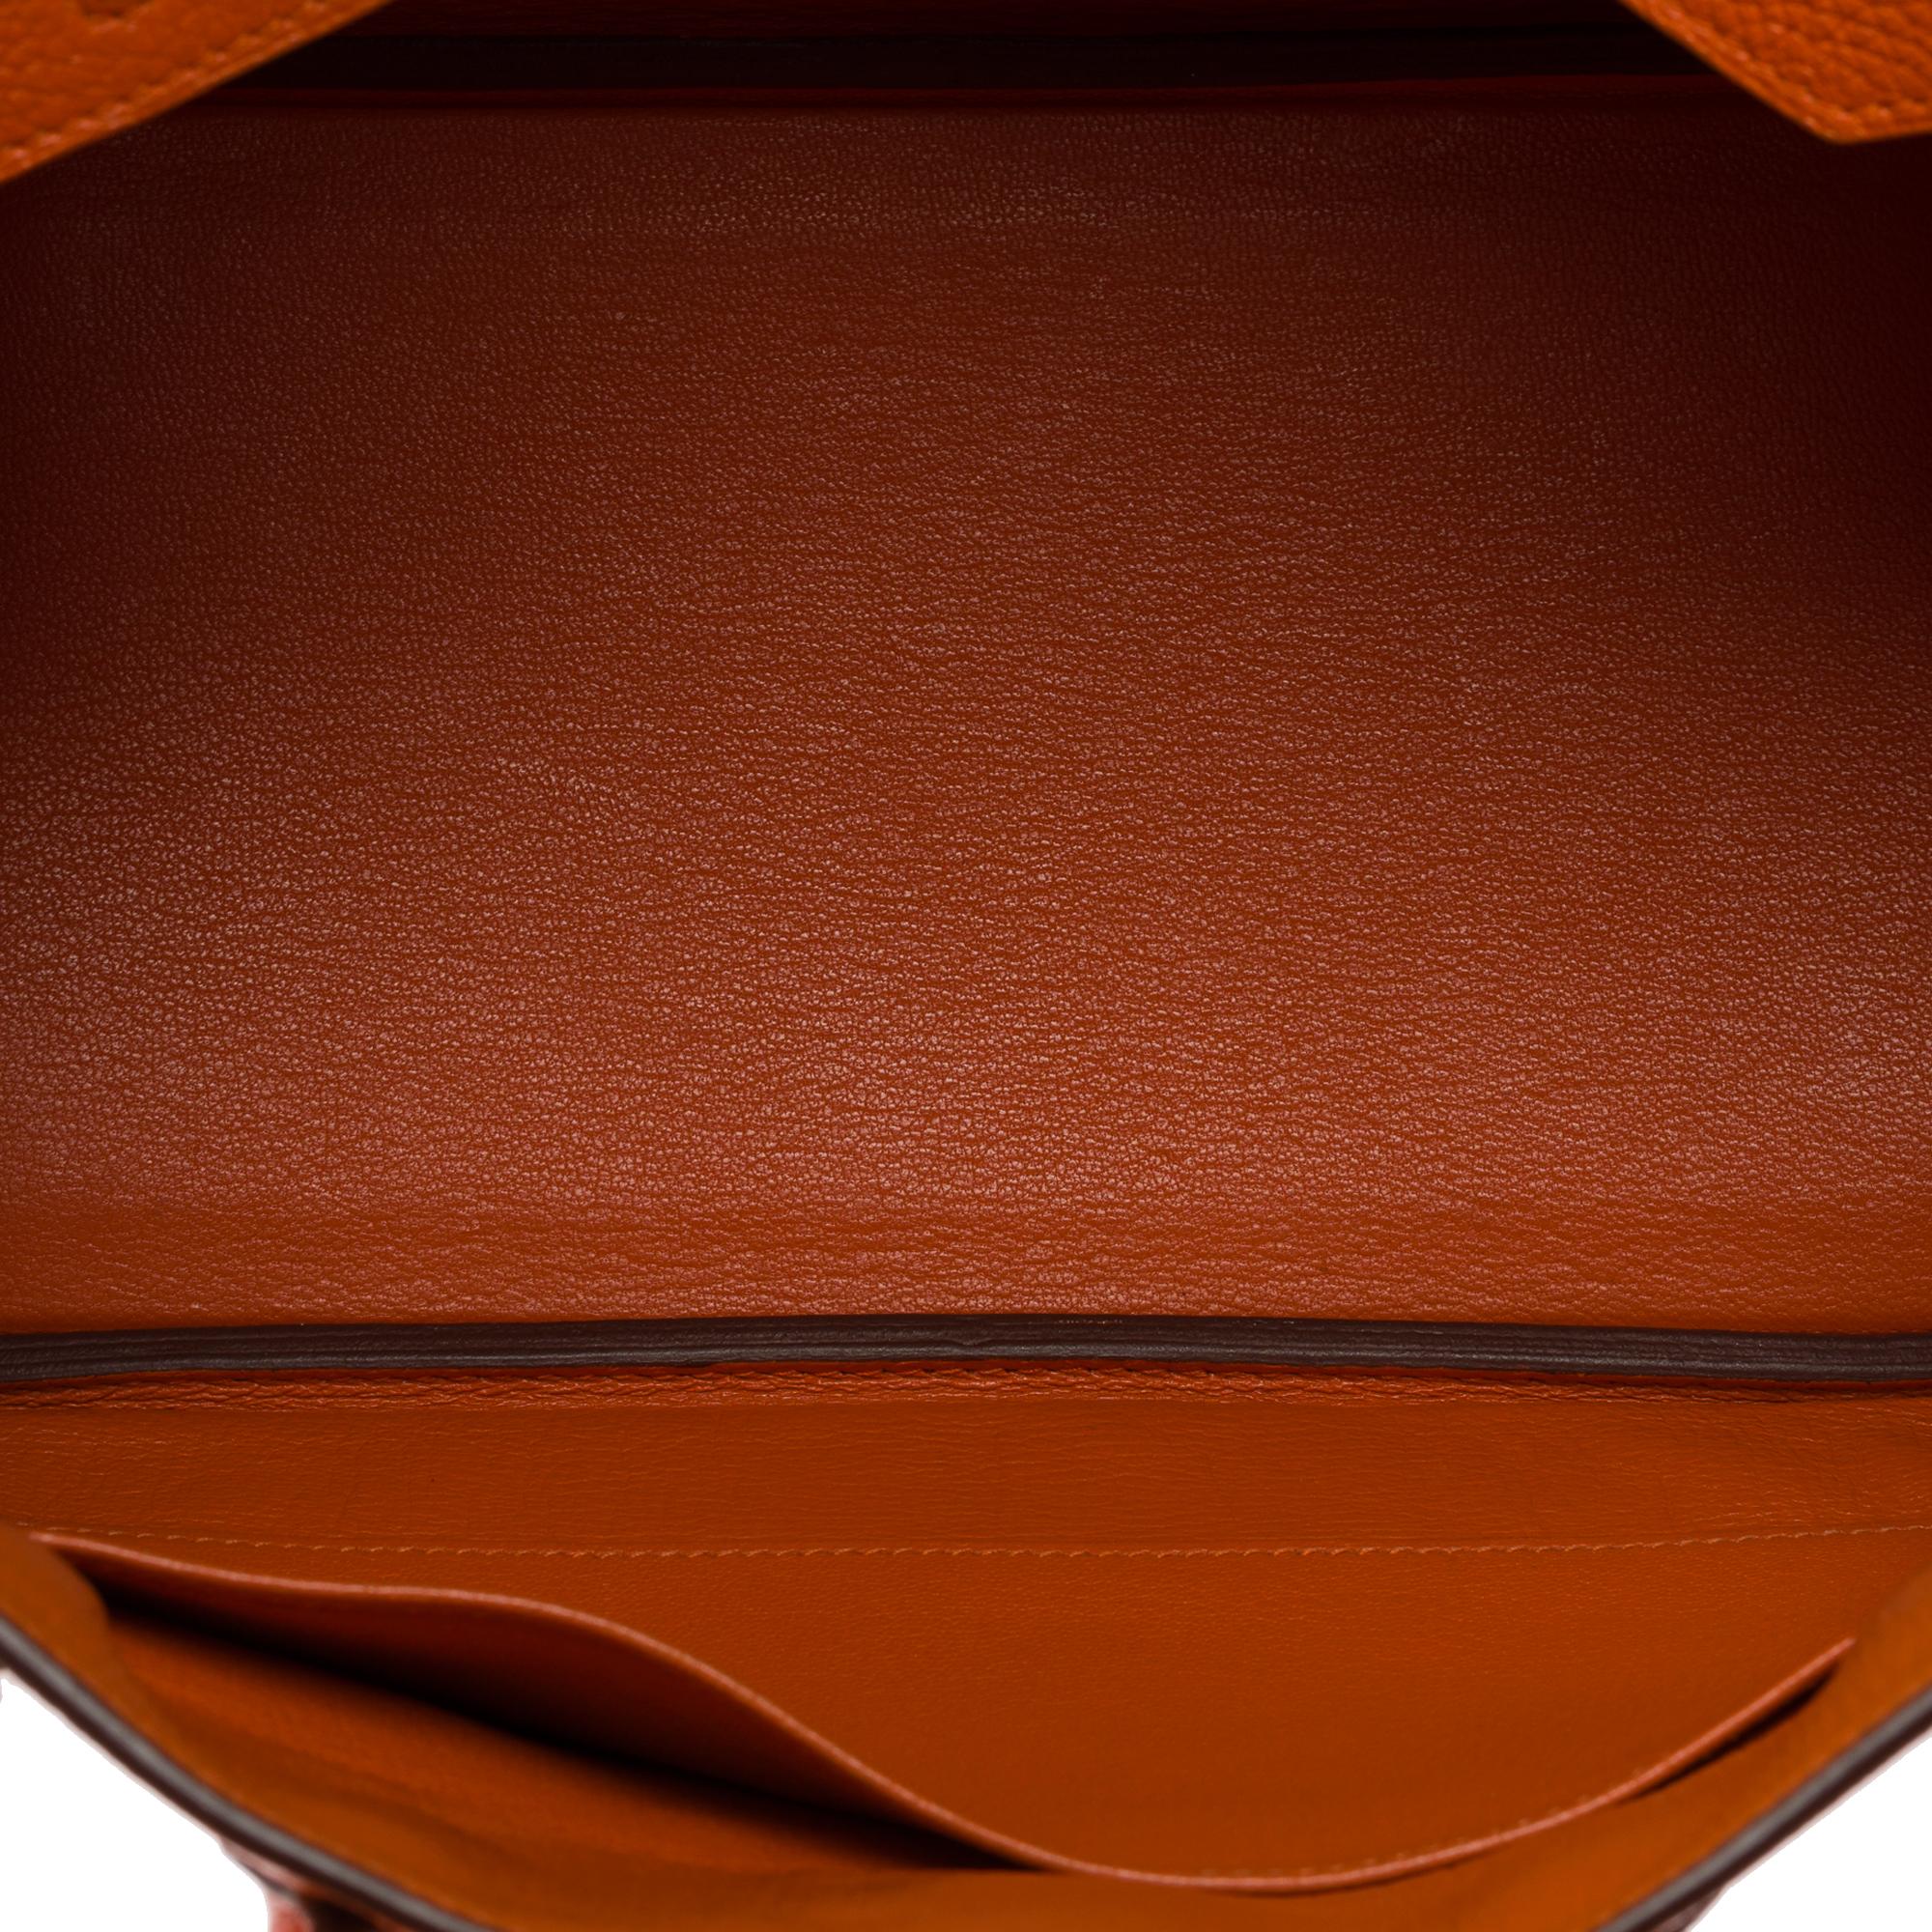 Amazing & Bright Hermès Birkin 30 handbag in Orange H Togo leather, SHW For Sale 4